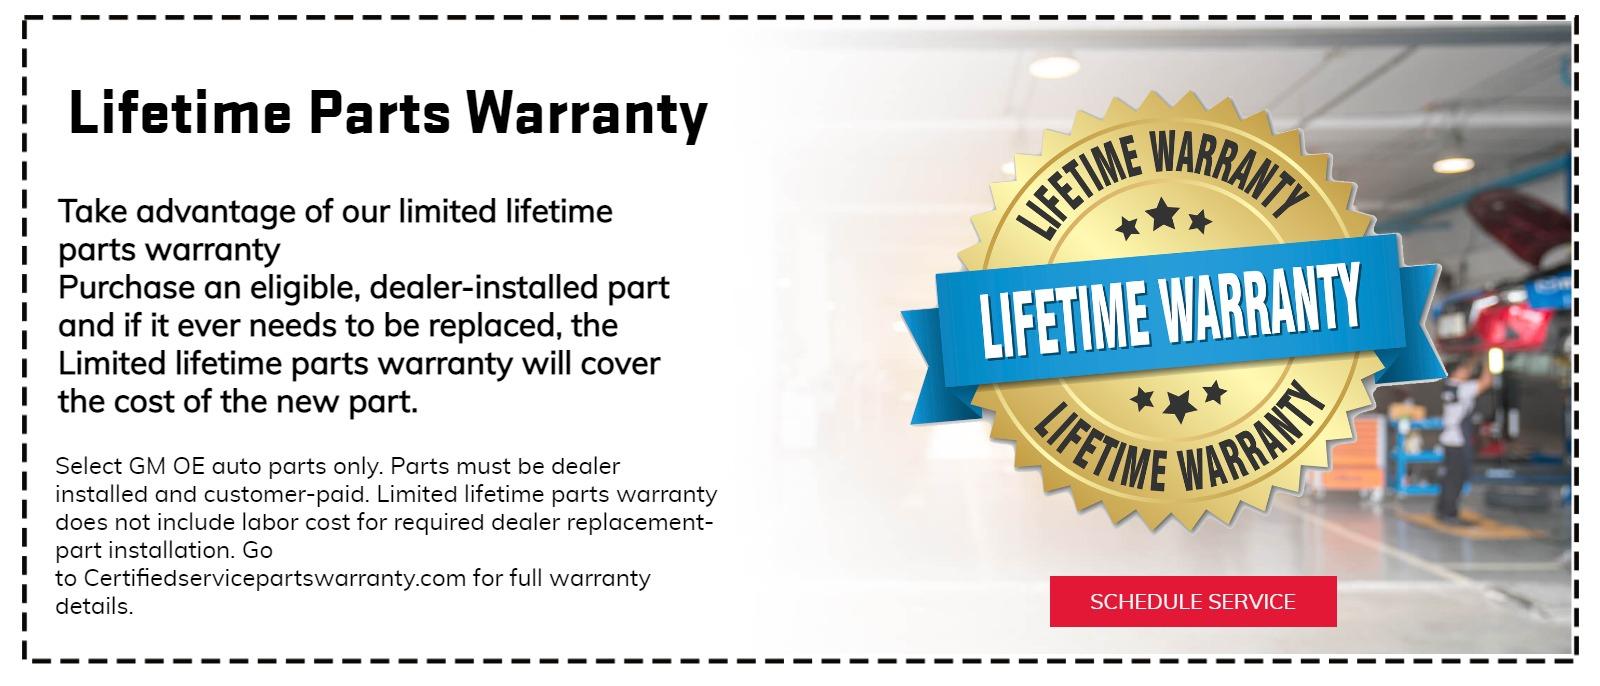 Lifetime Parts Warranty